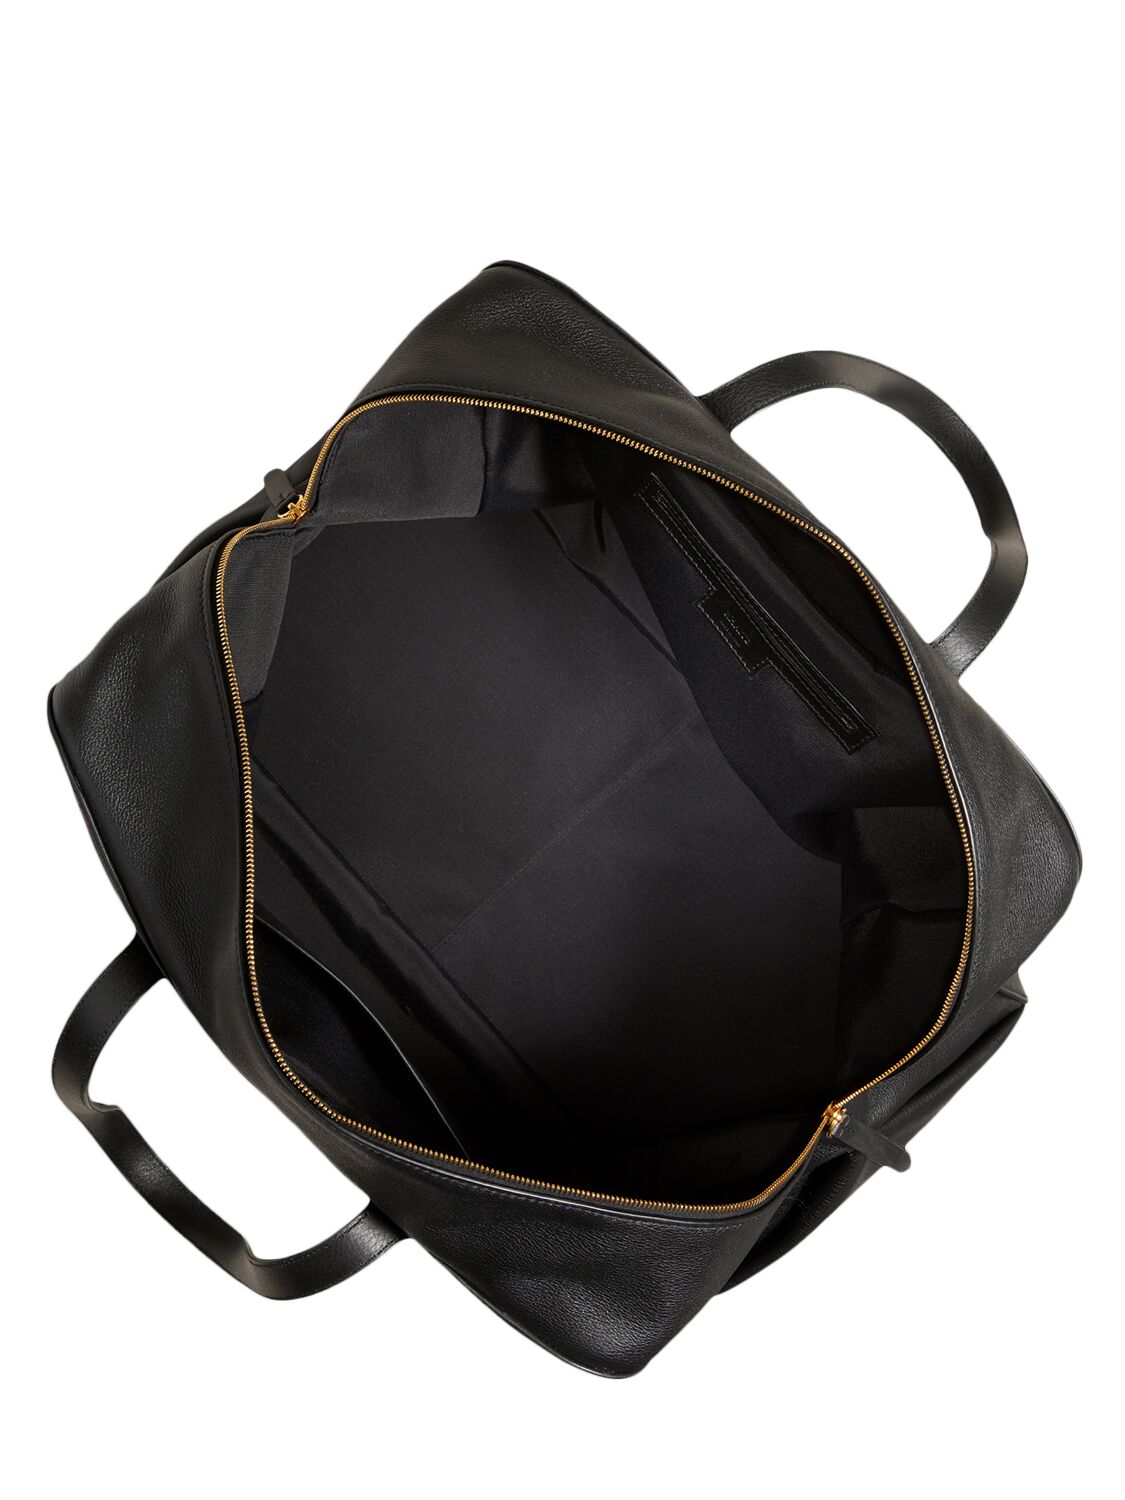 Gucci Black Soft Gg Supreme Backpack, $1,890, SSENSE